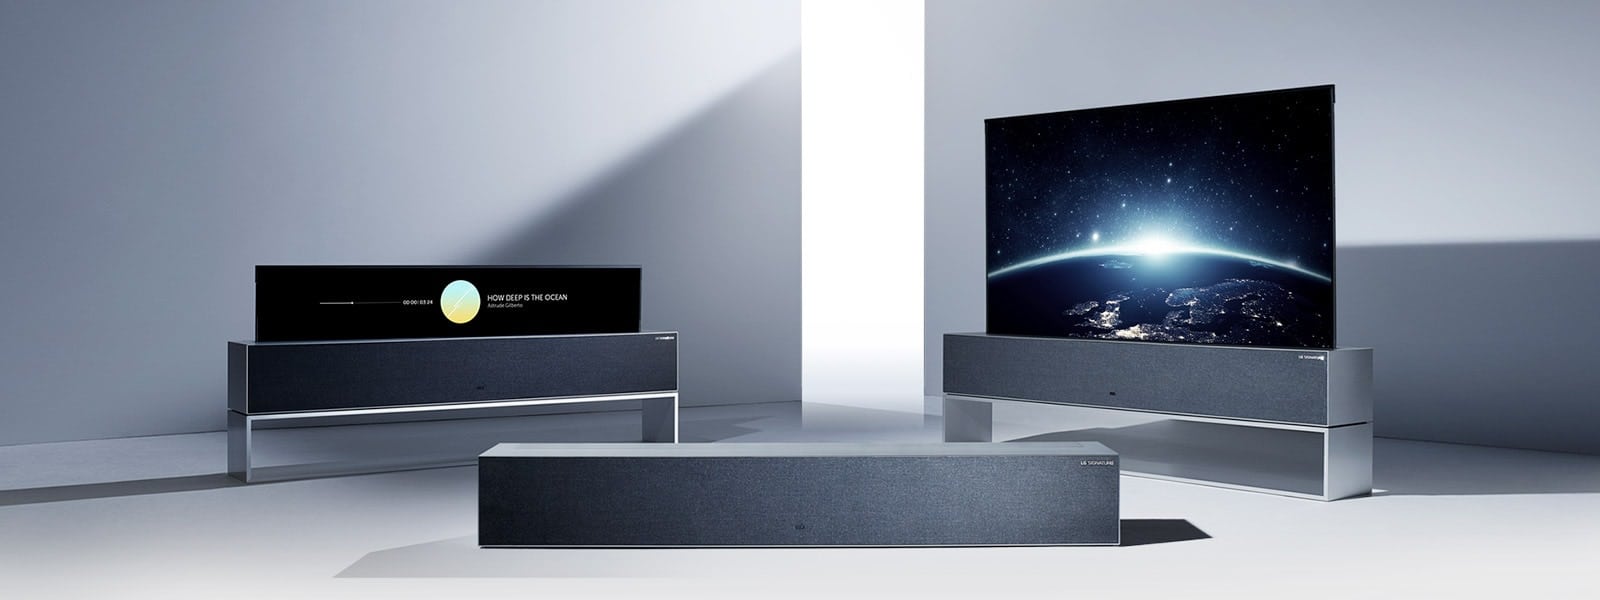 LG R1 Signature OLED TV